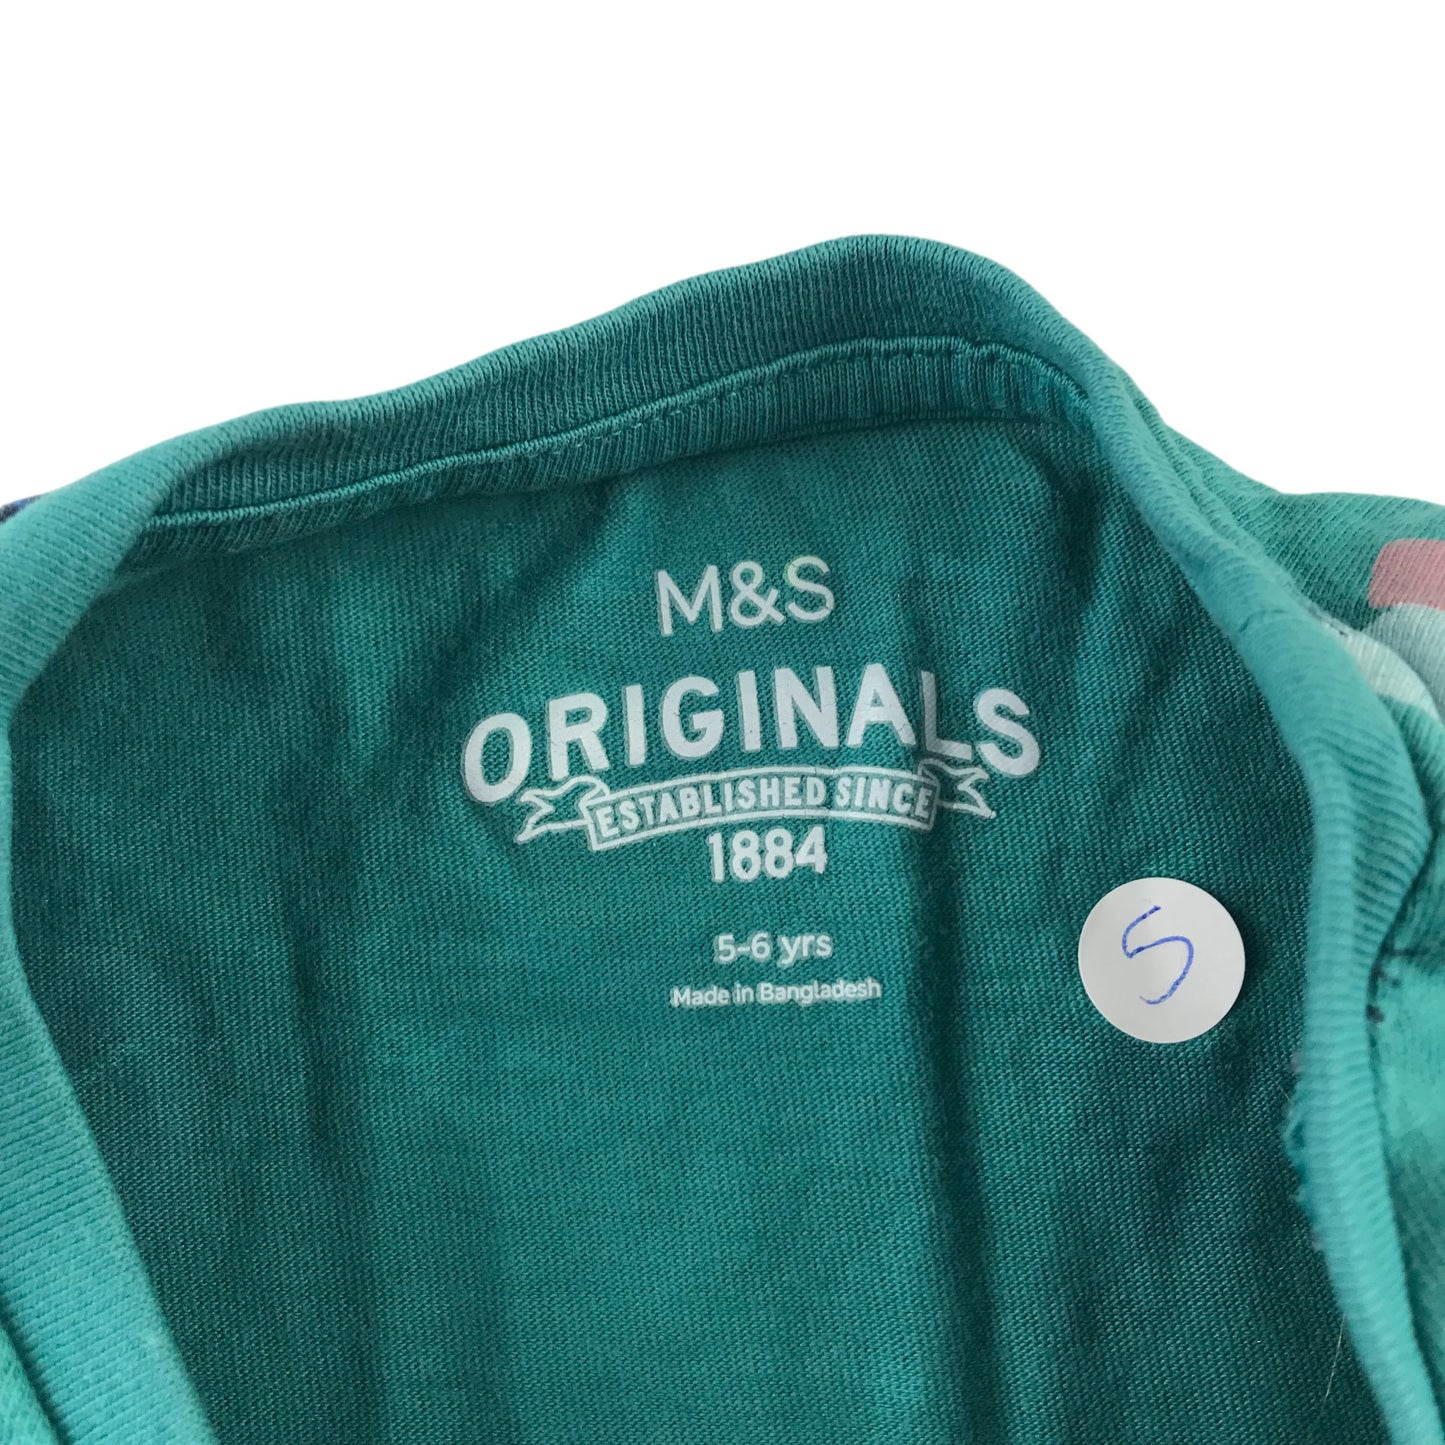 M&S Dress 5-6 years Turquoise Teal Marine Animals Cotton T-shirt